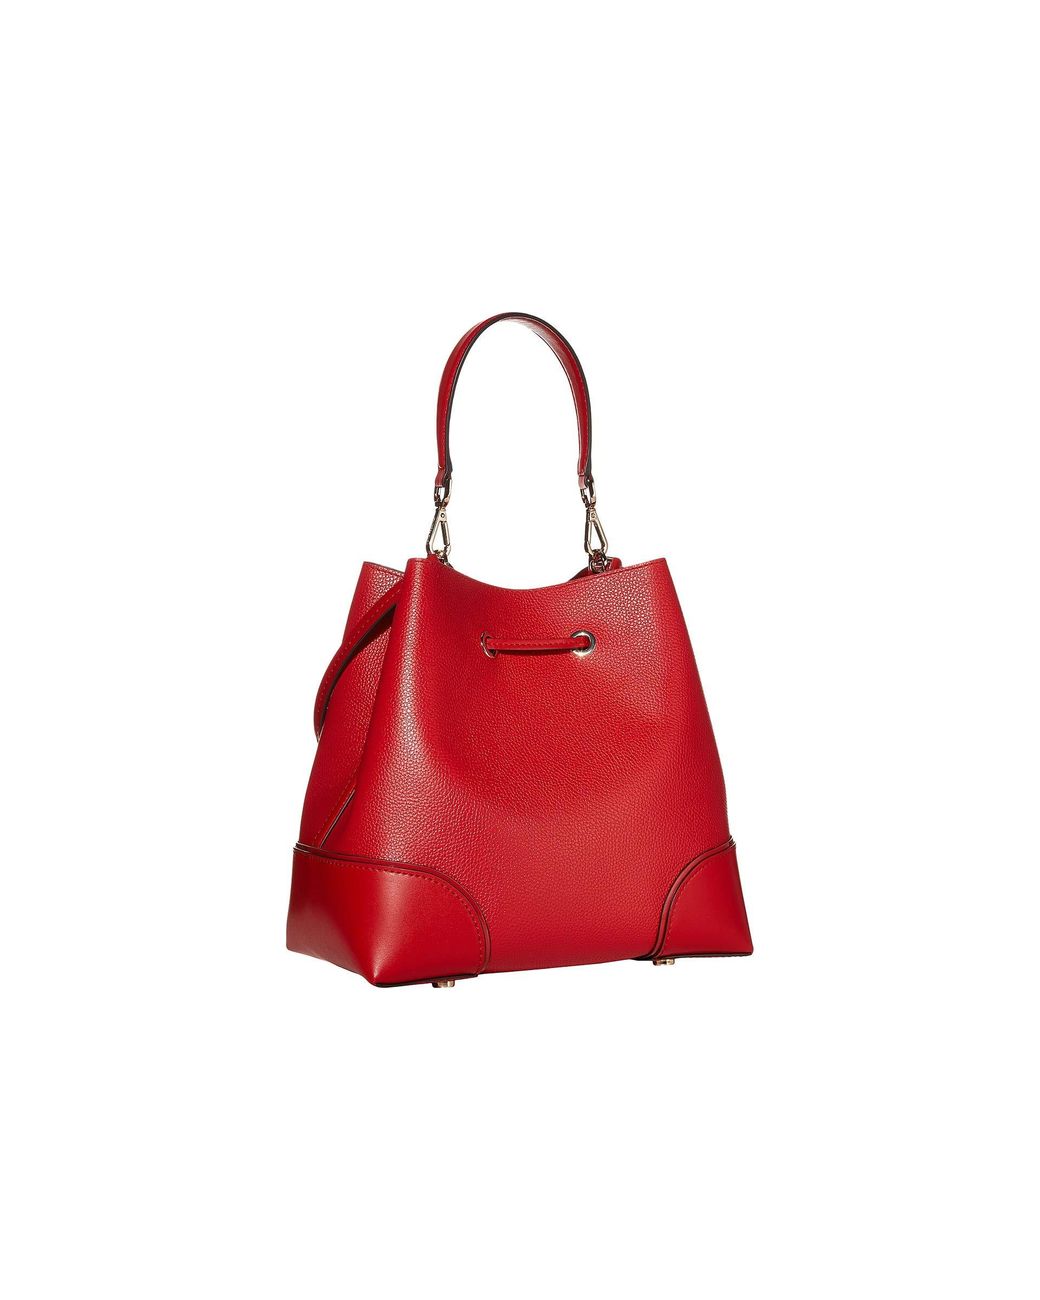 Michael Kors Mercer Gallery Medium Convertible Bucket Leather Shoulder Bag